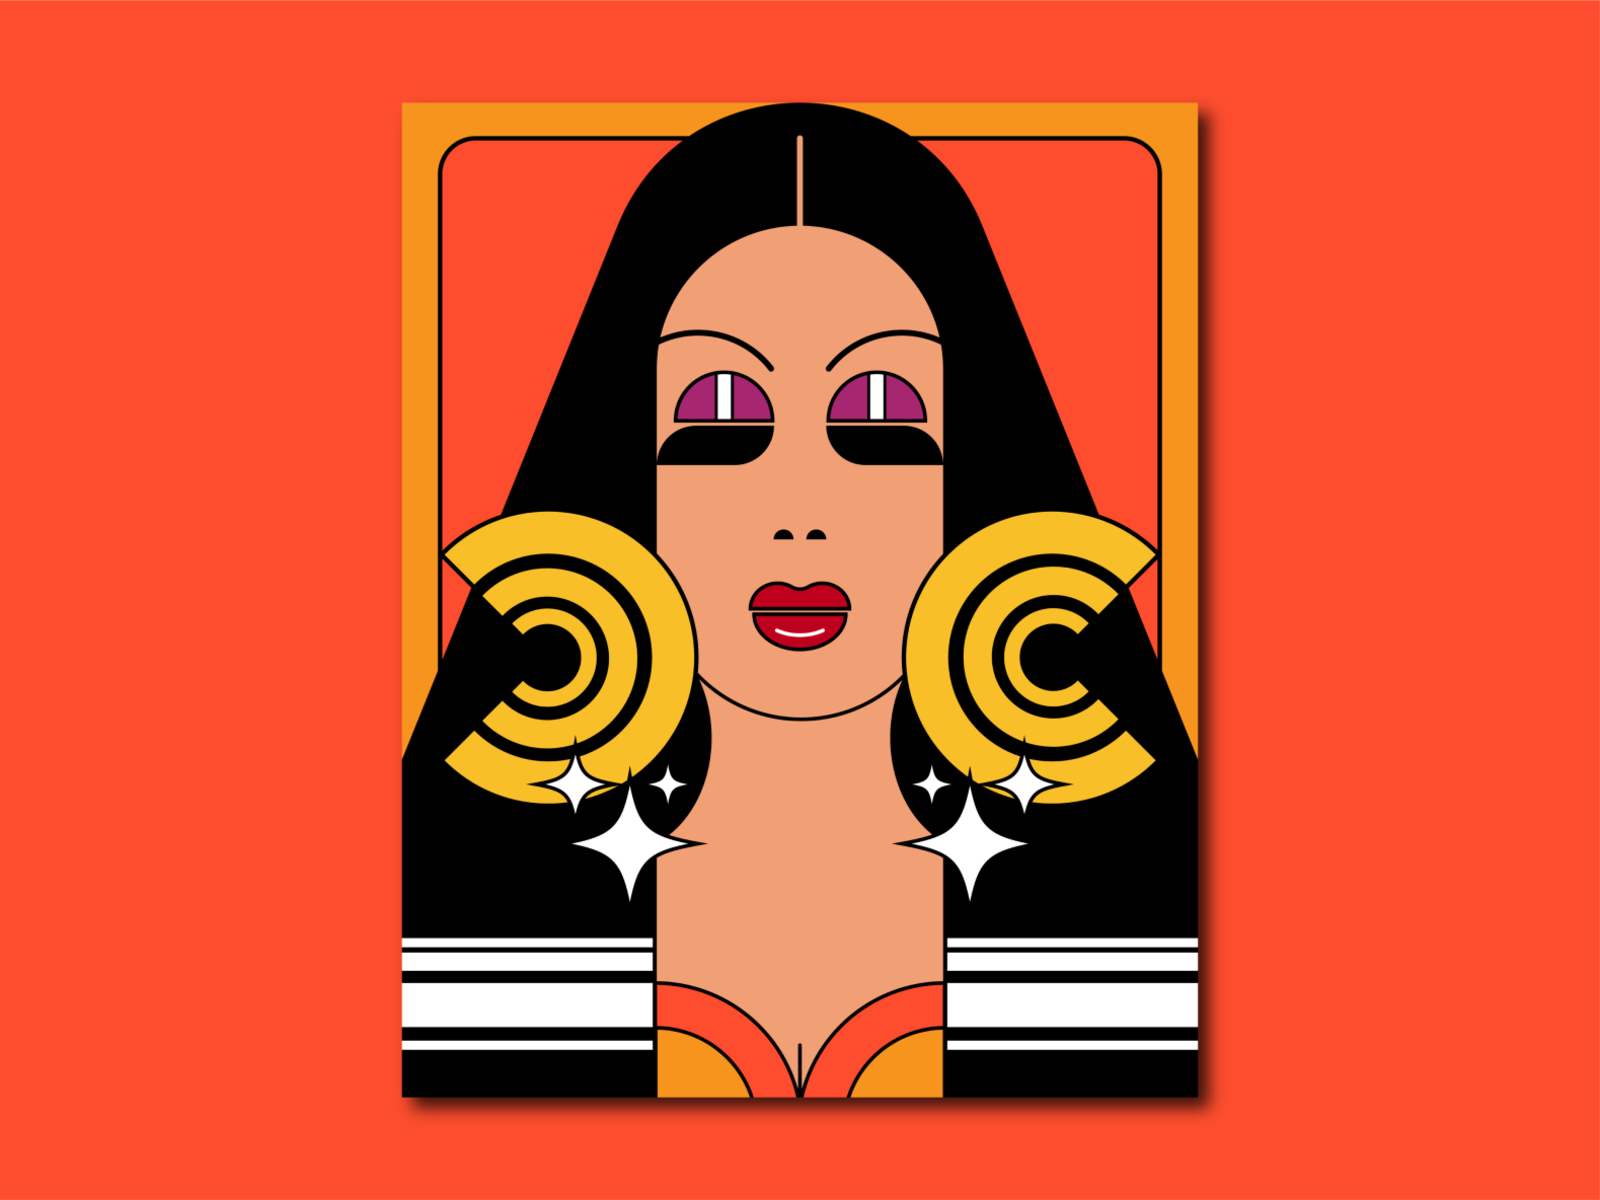 Cher 70s art celebrity cher creative disco drawing illustration illustrator minimalism music pop culture portrait retro vector vintage